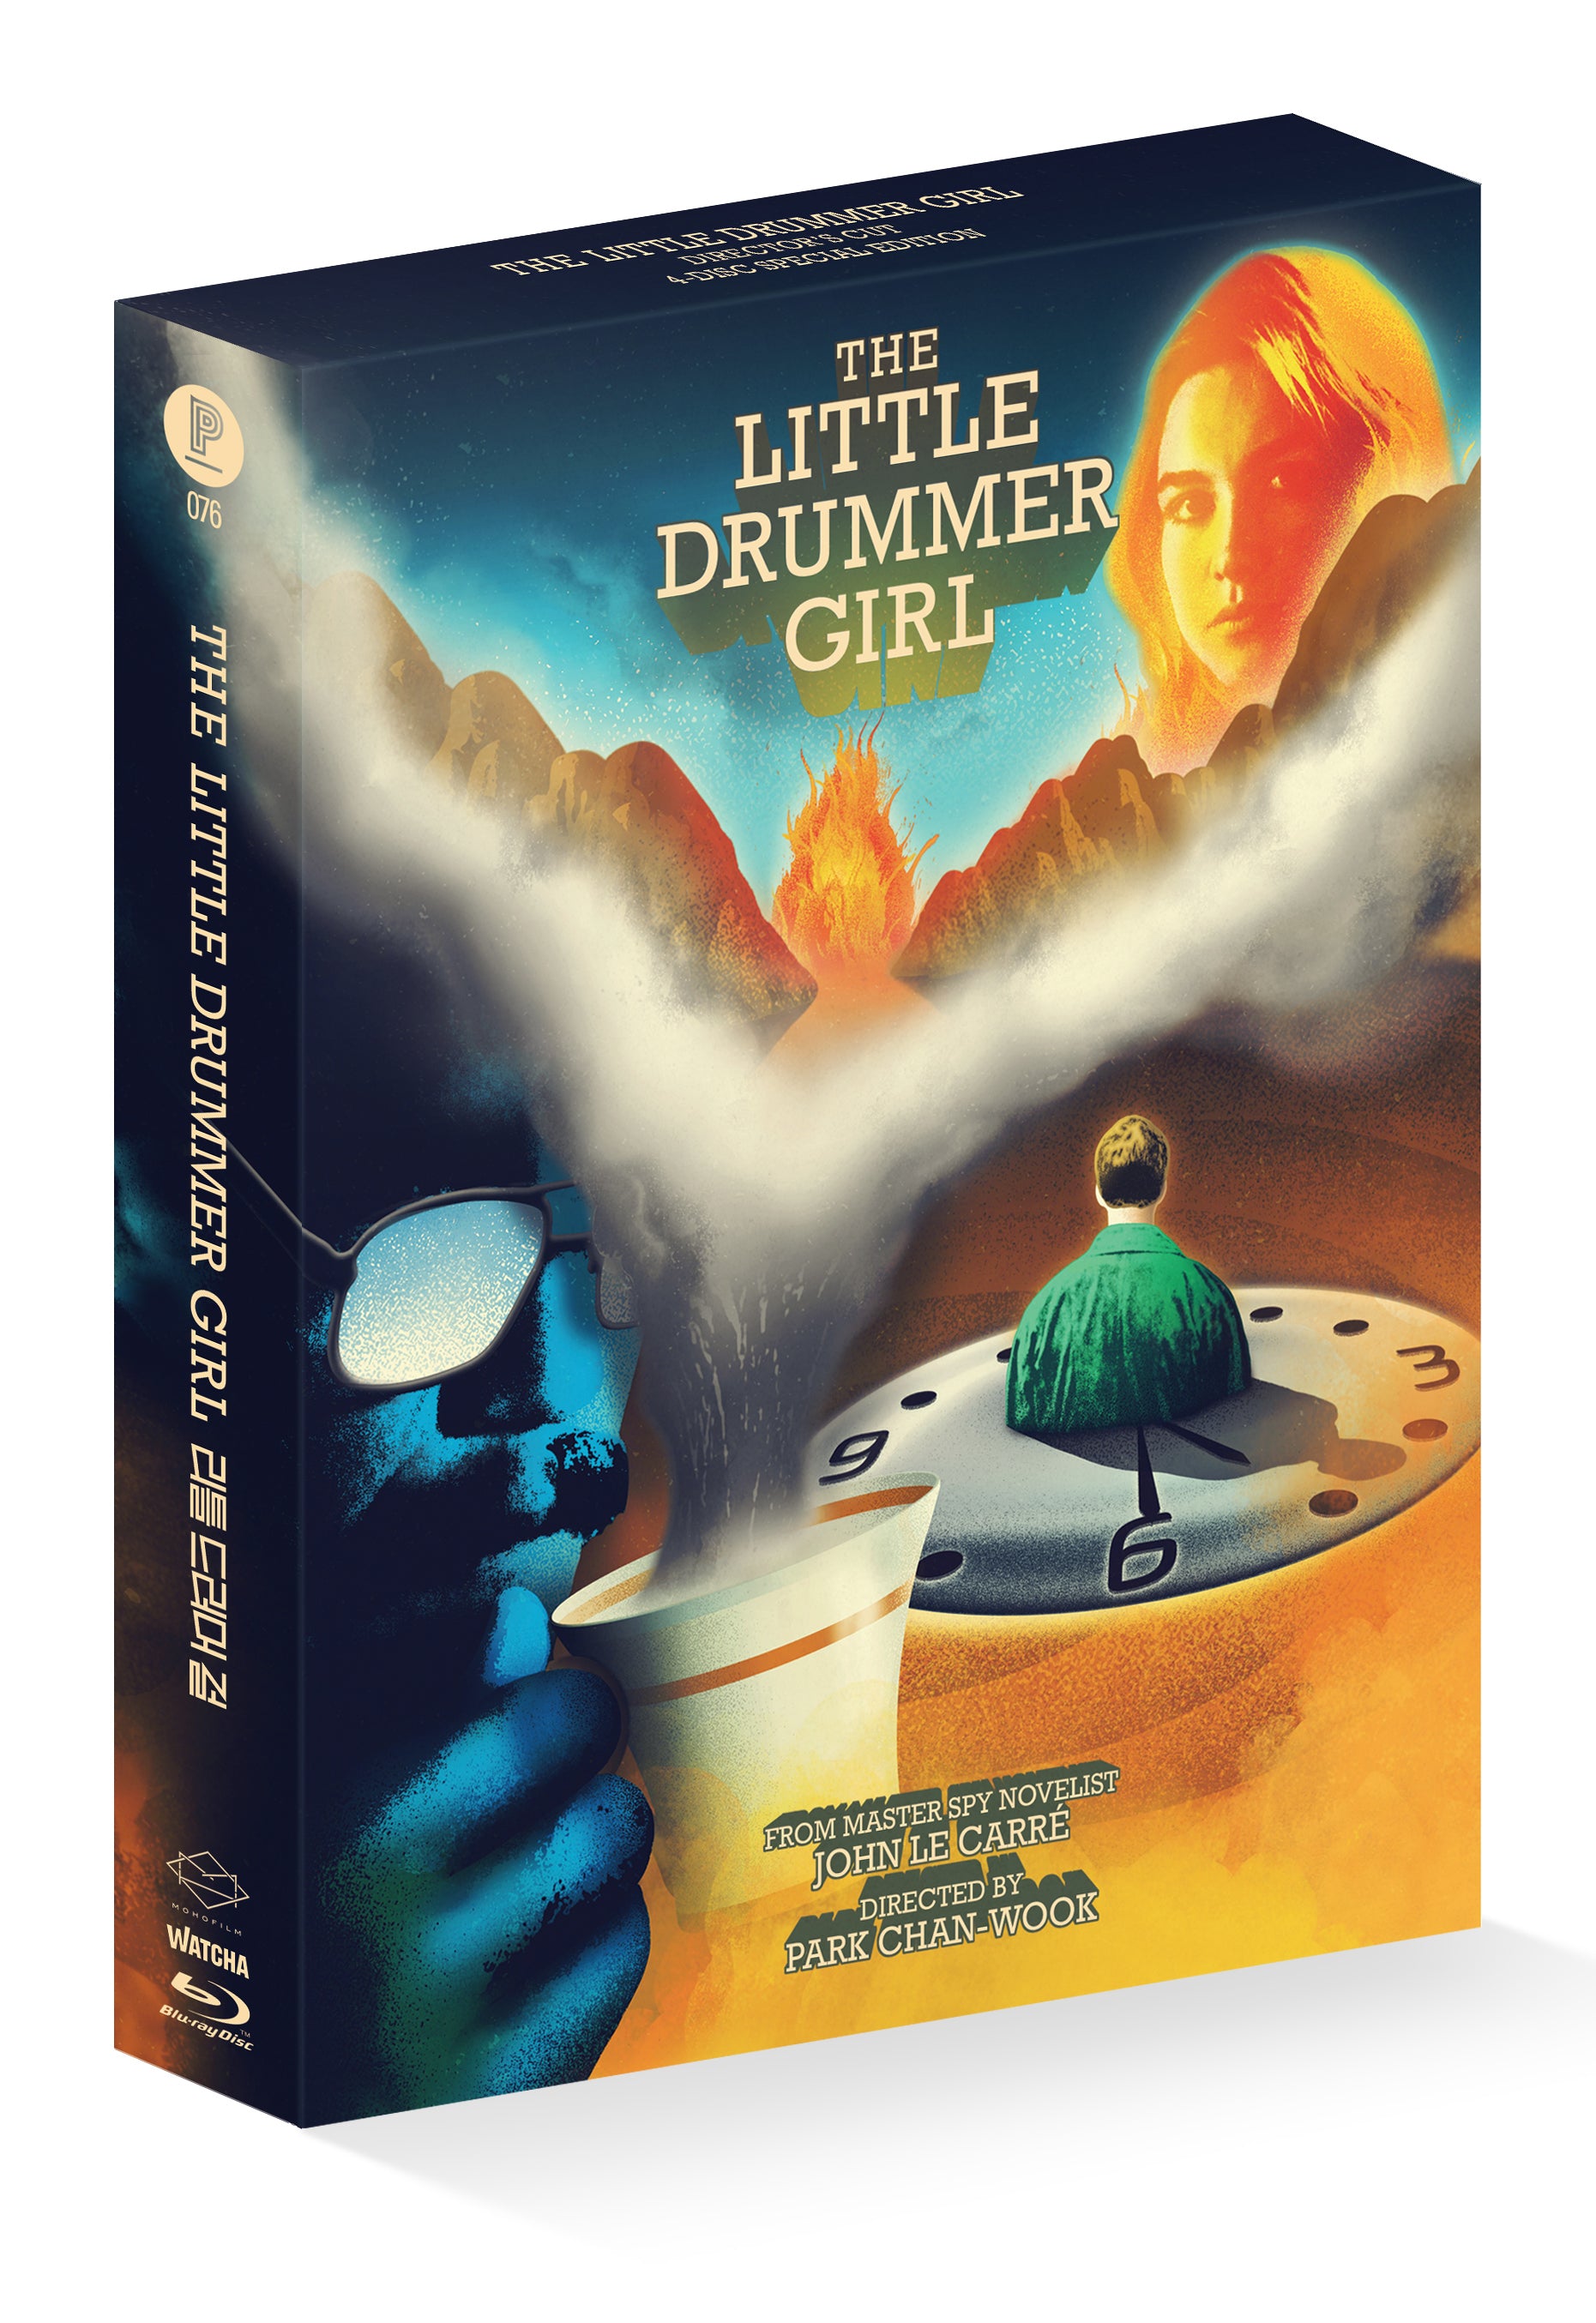 The Little Drummer Girl: Director's Cut Blu-ray (4Discs)